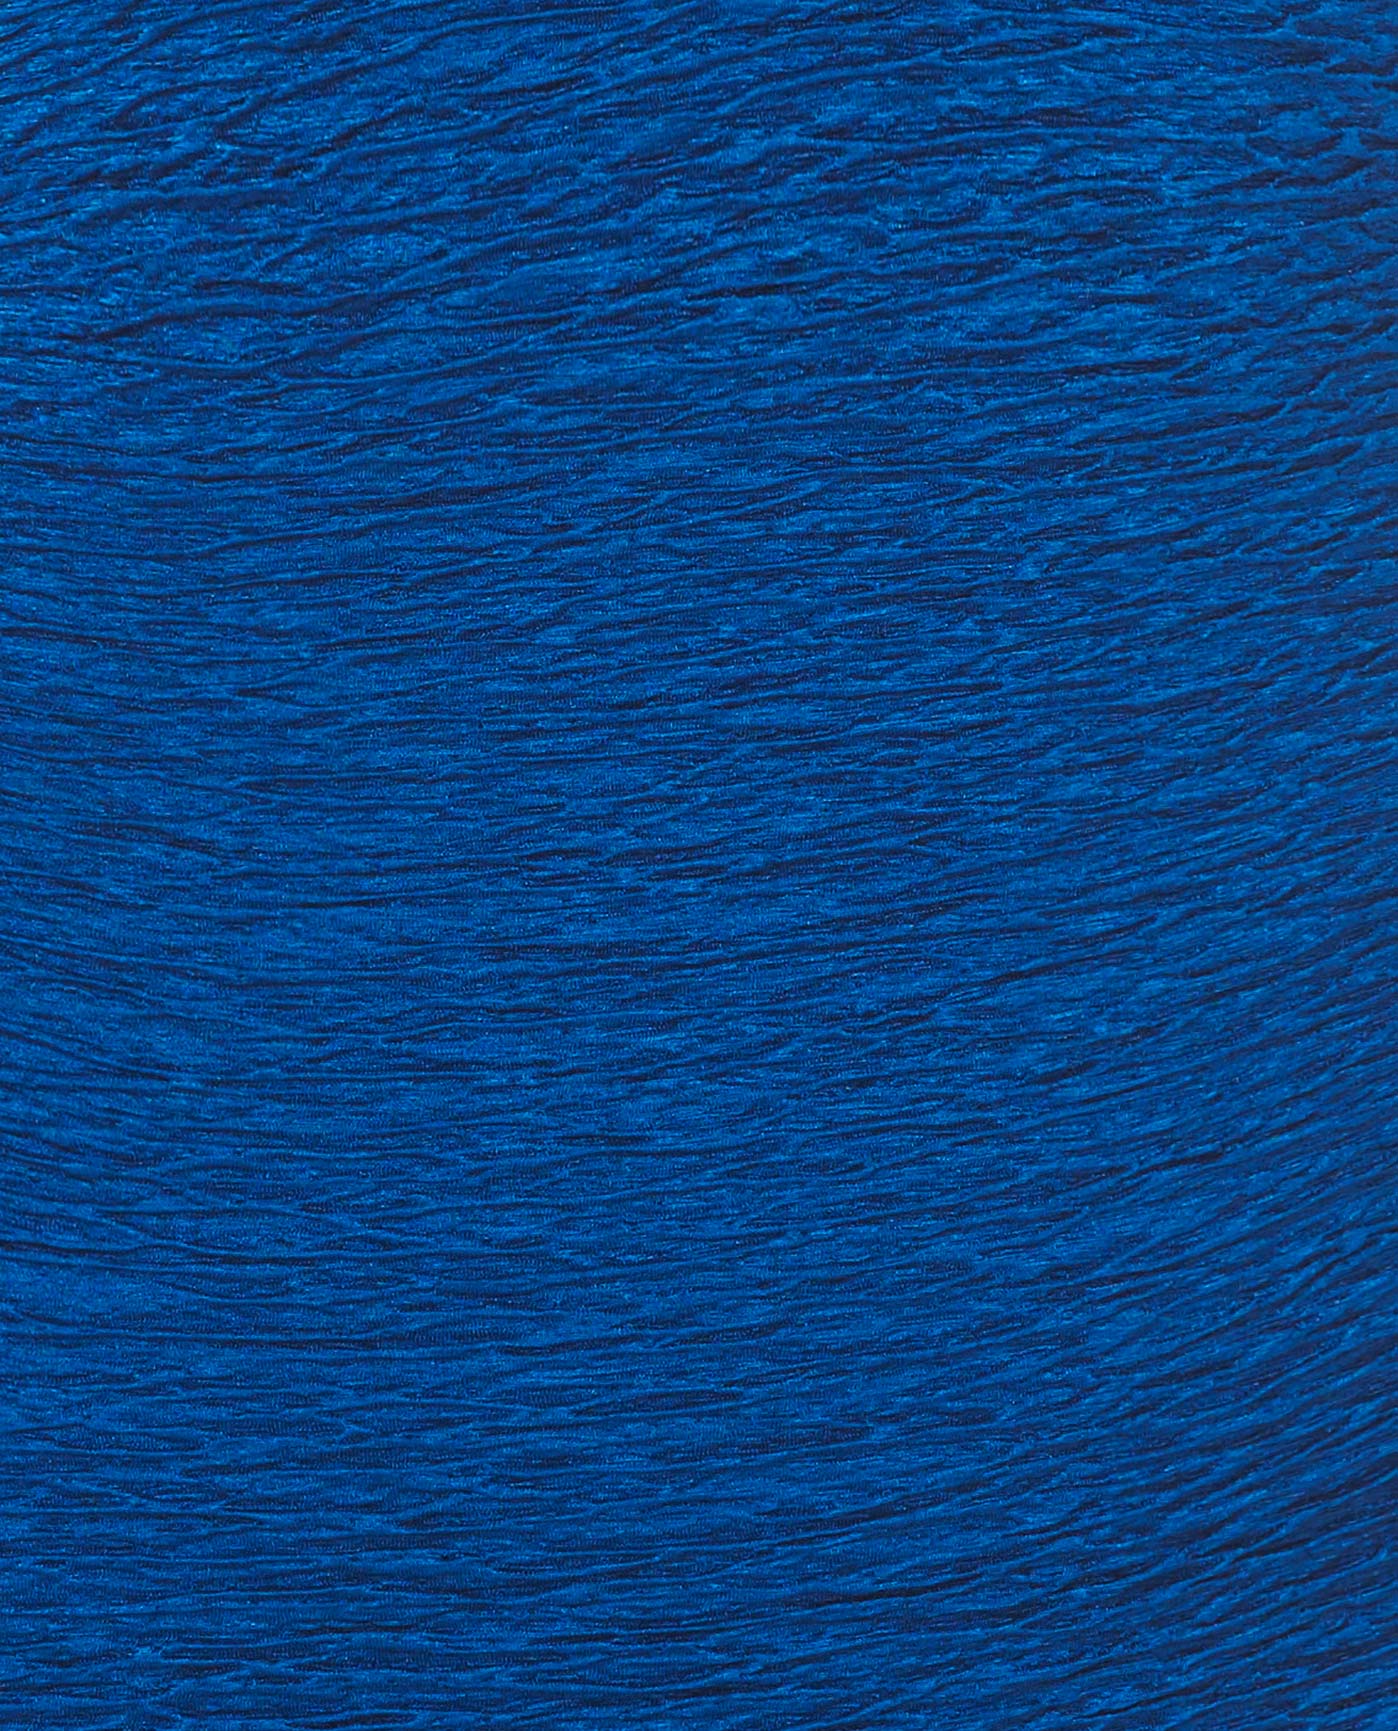 FABRIC SWATCH VIEW OF CHLORINE RESISTANT KRINKLE TEXTURED SOLID MOCK SURPLICE ONE PIECE | KRINKLE MARINE BLUE